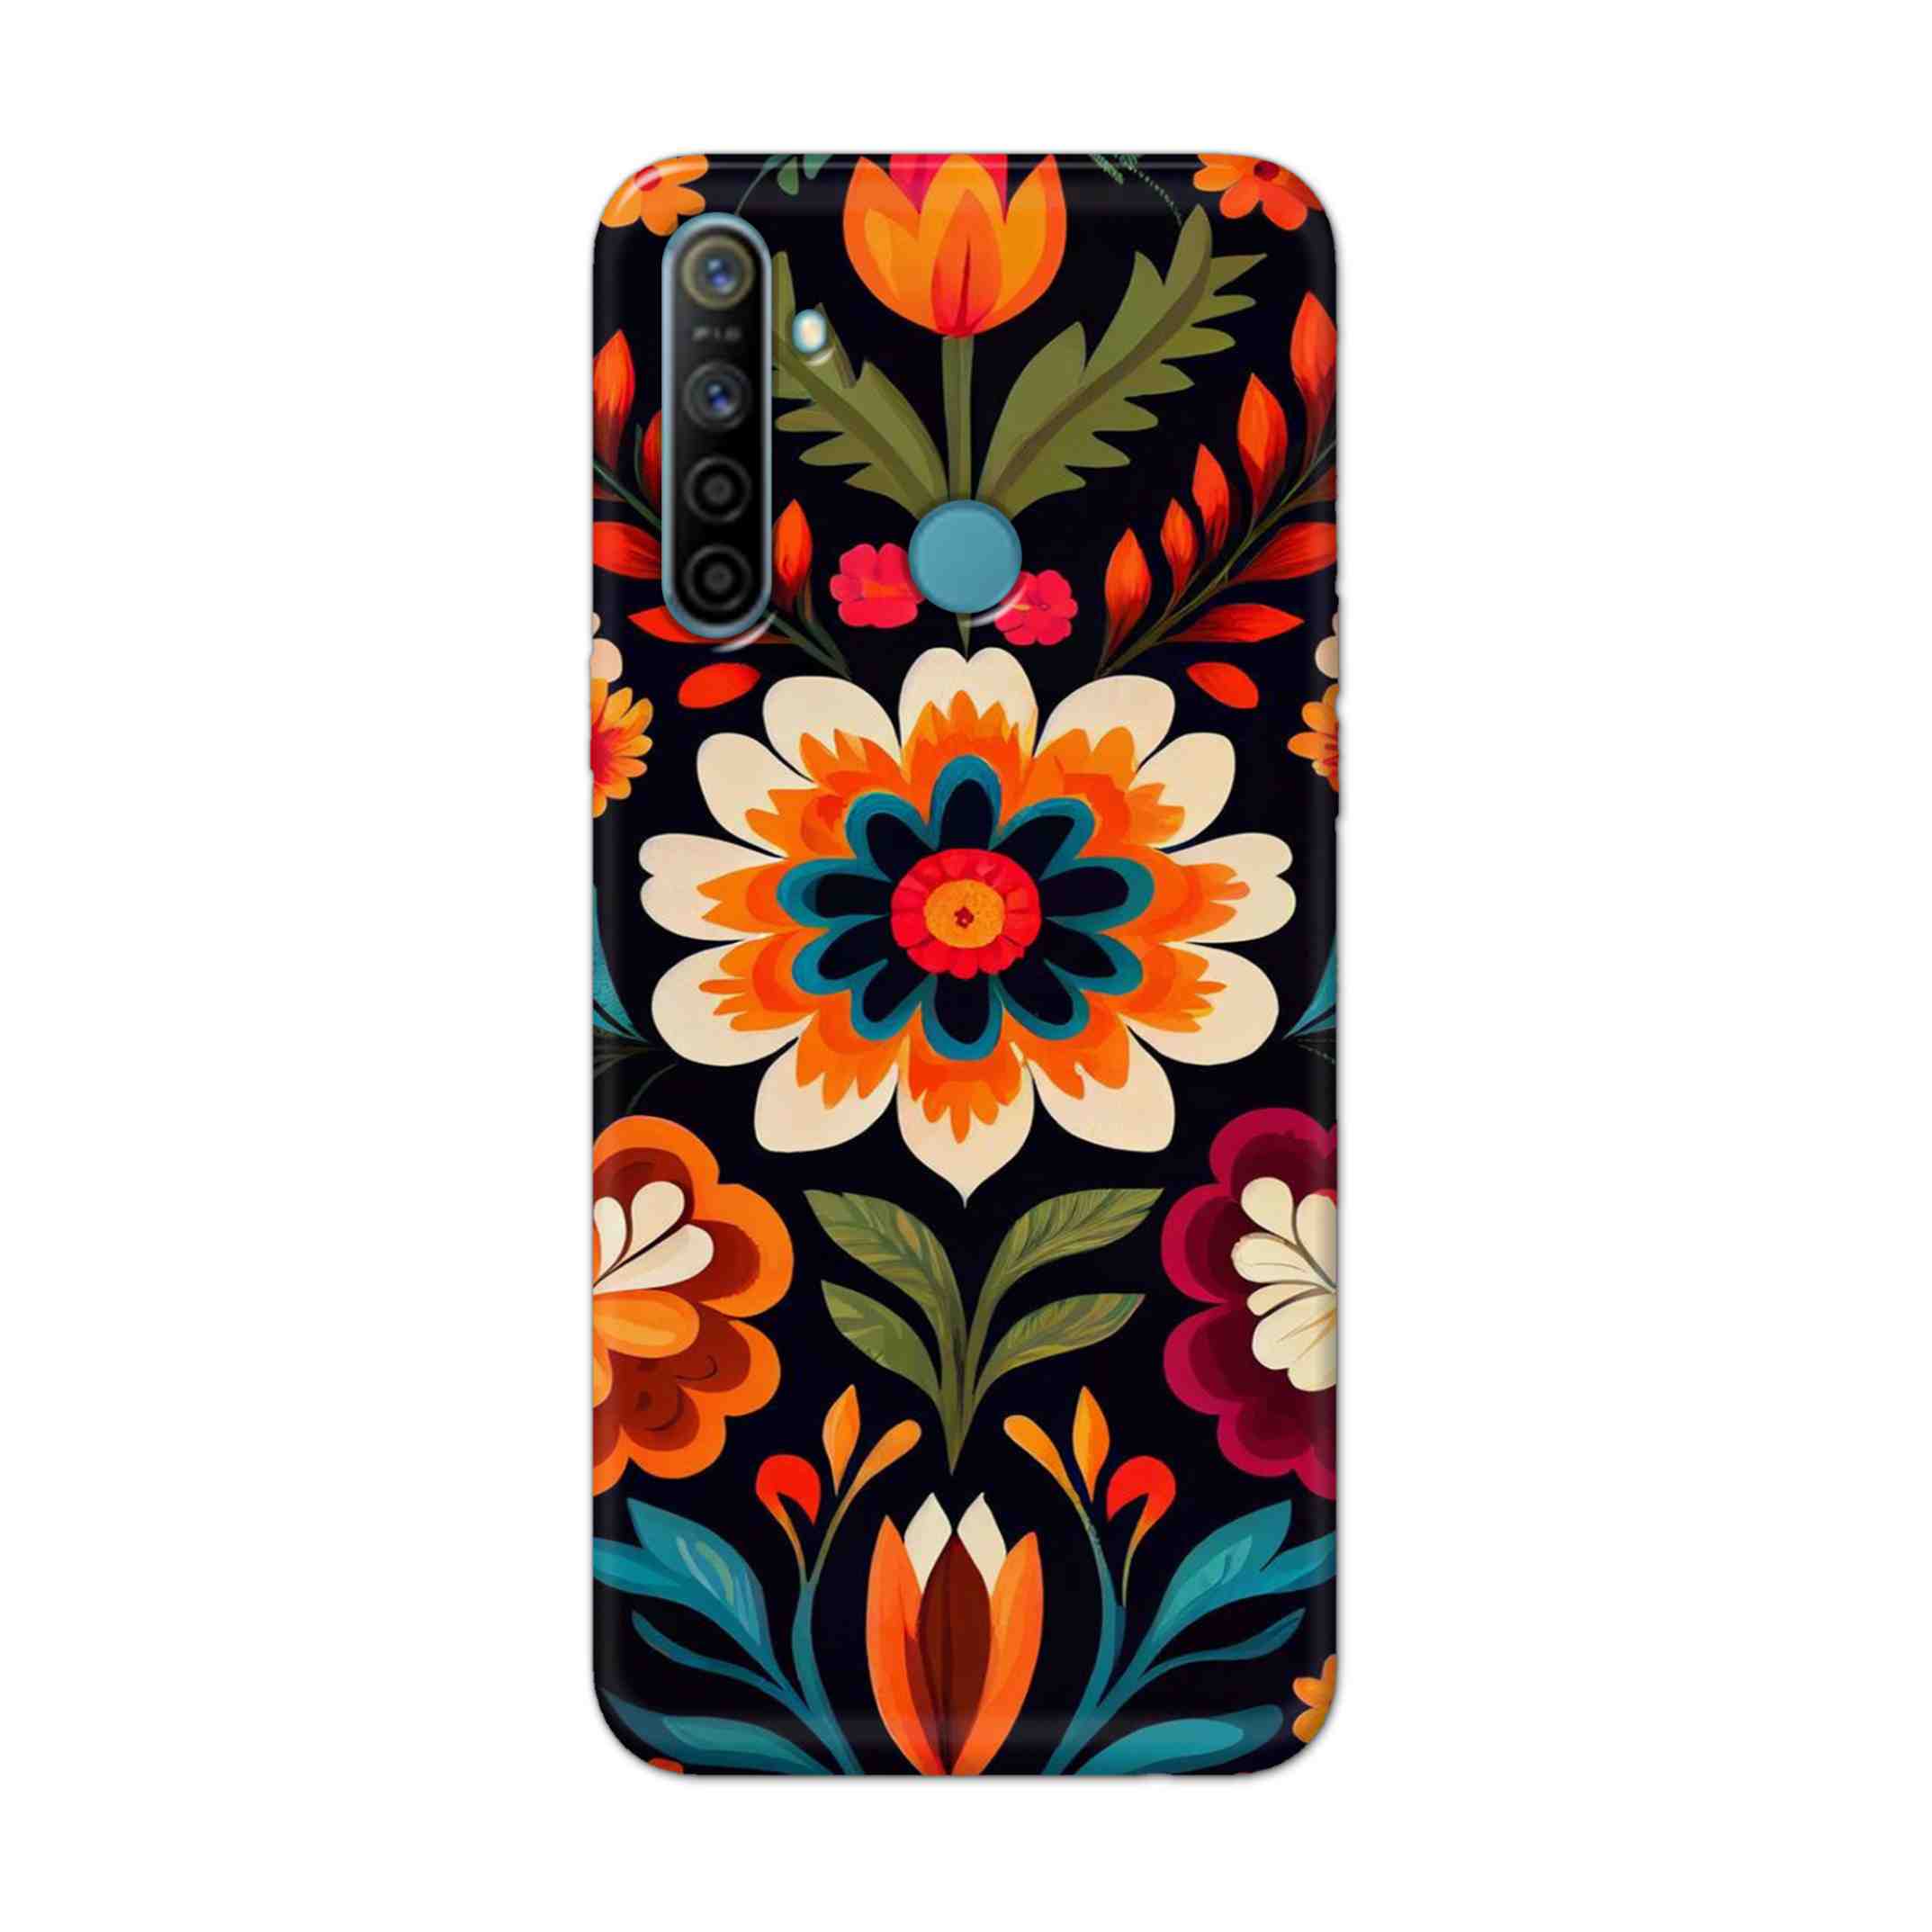 Buy Flower Hard Back Mobile Phone Case Cover For Realme 5i Online